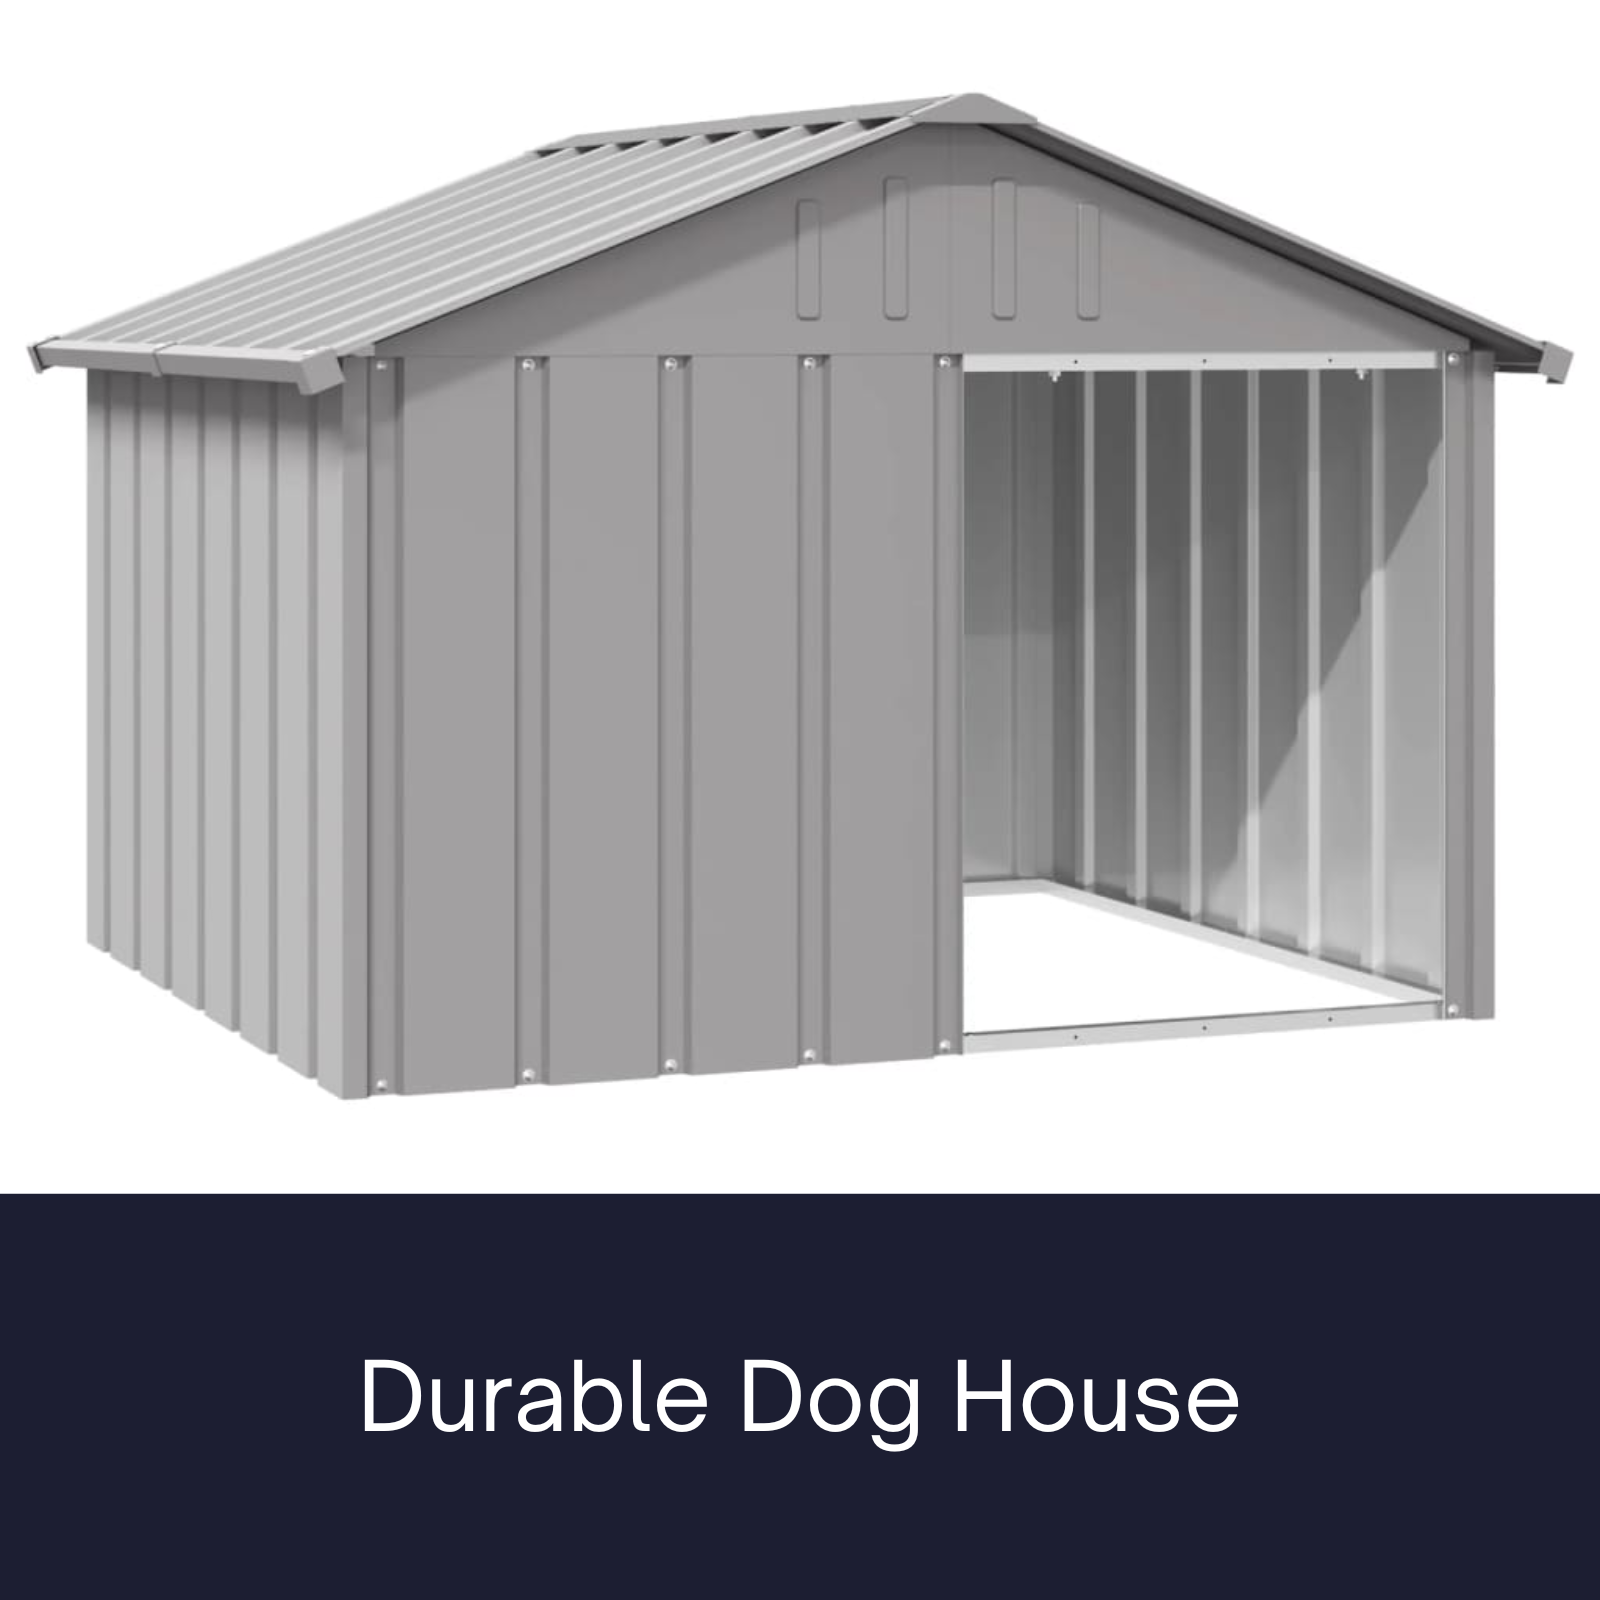 Kennel Dog House